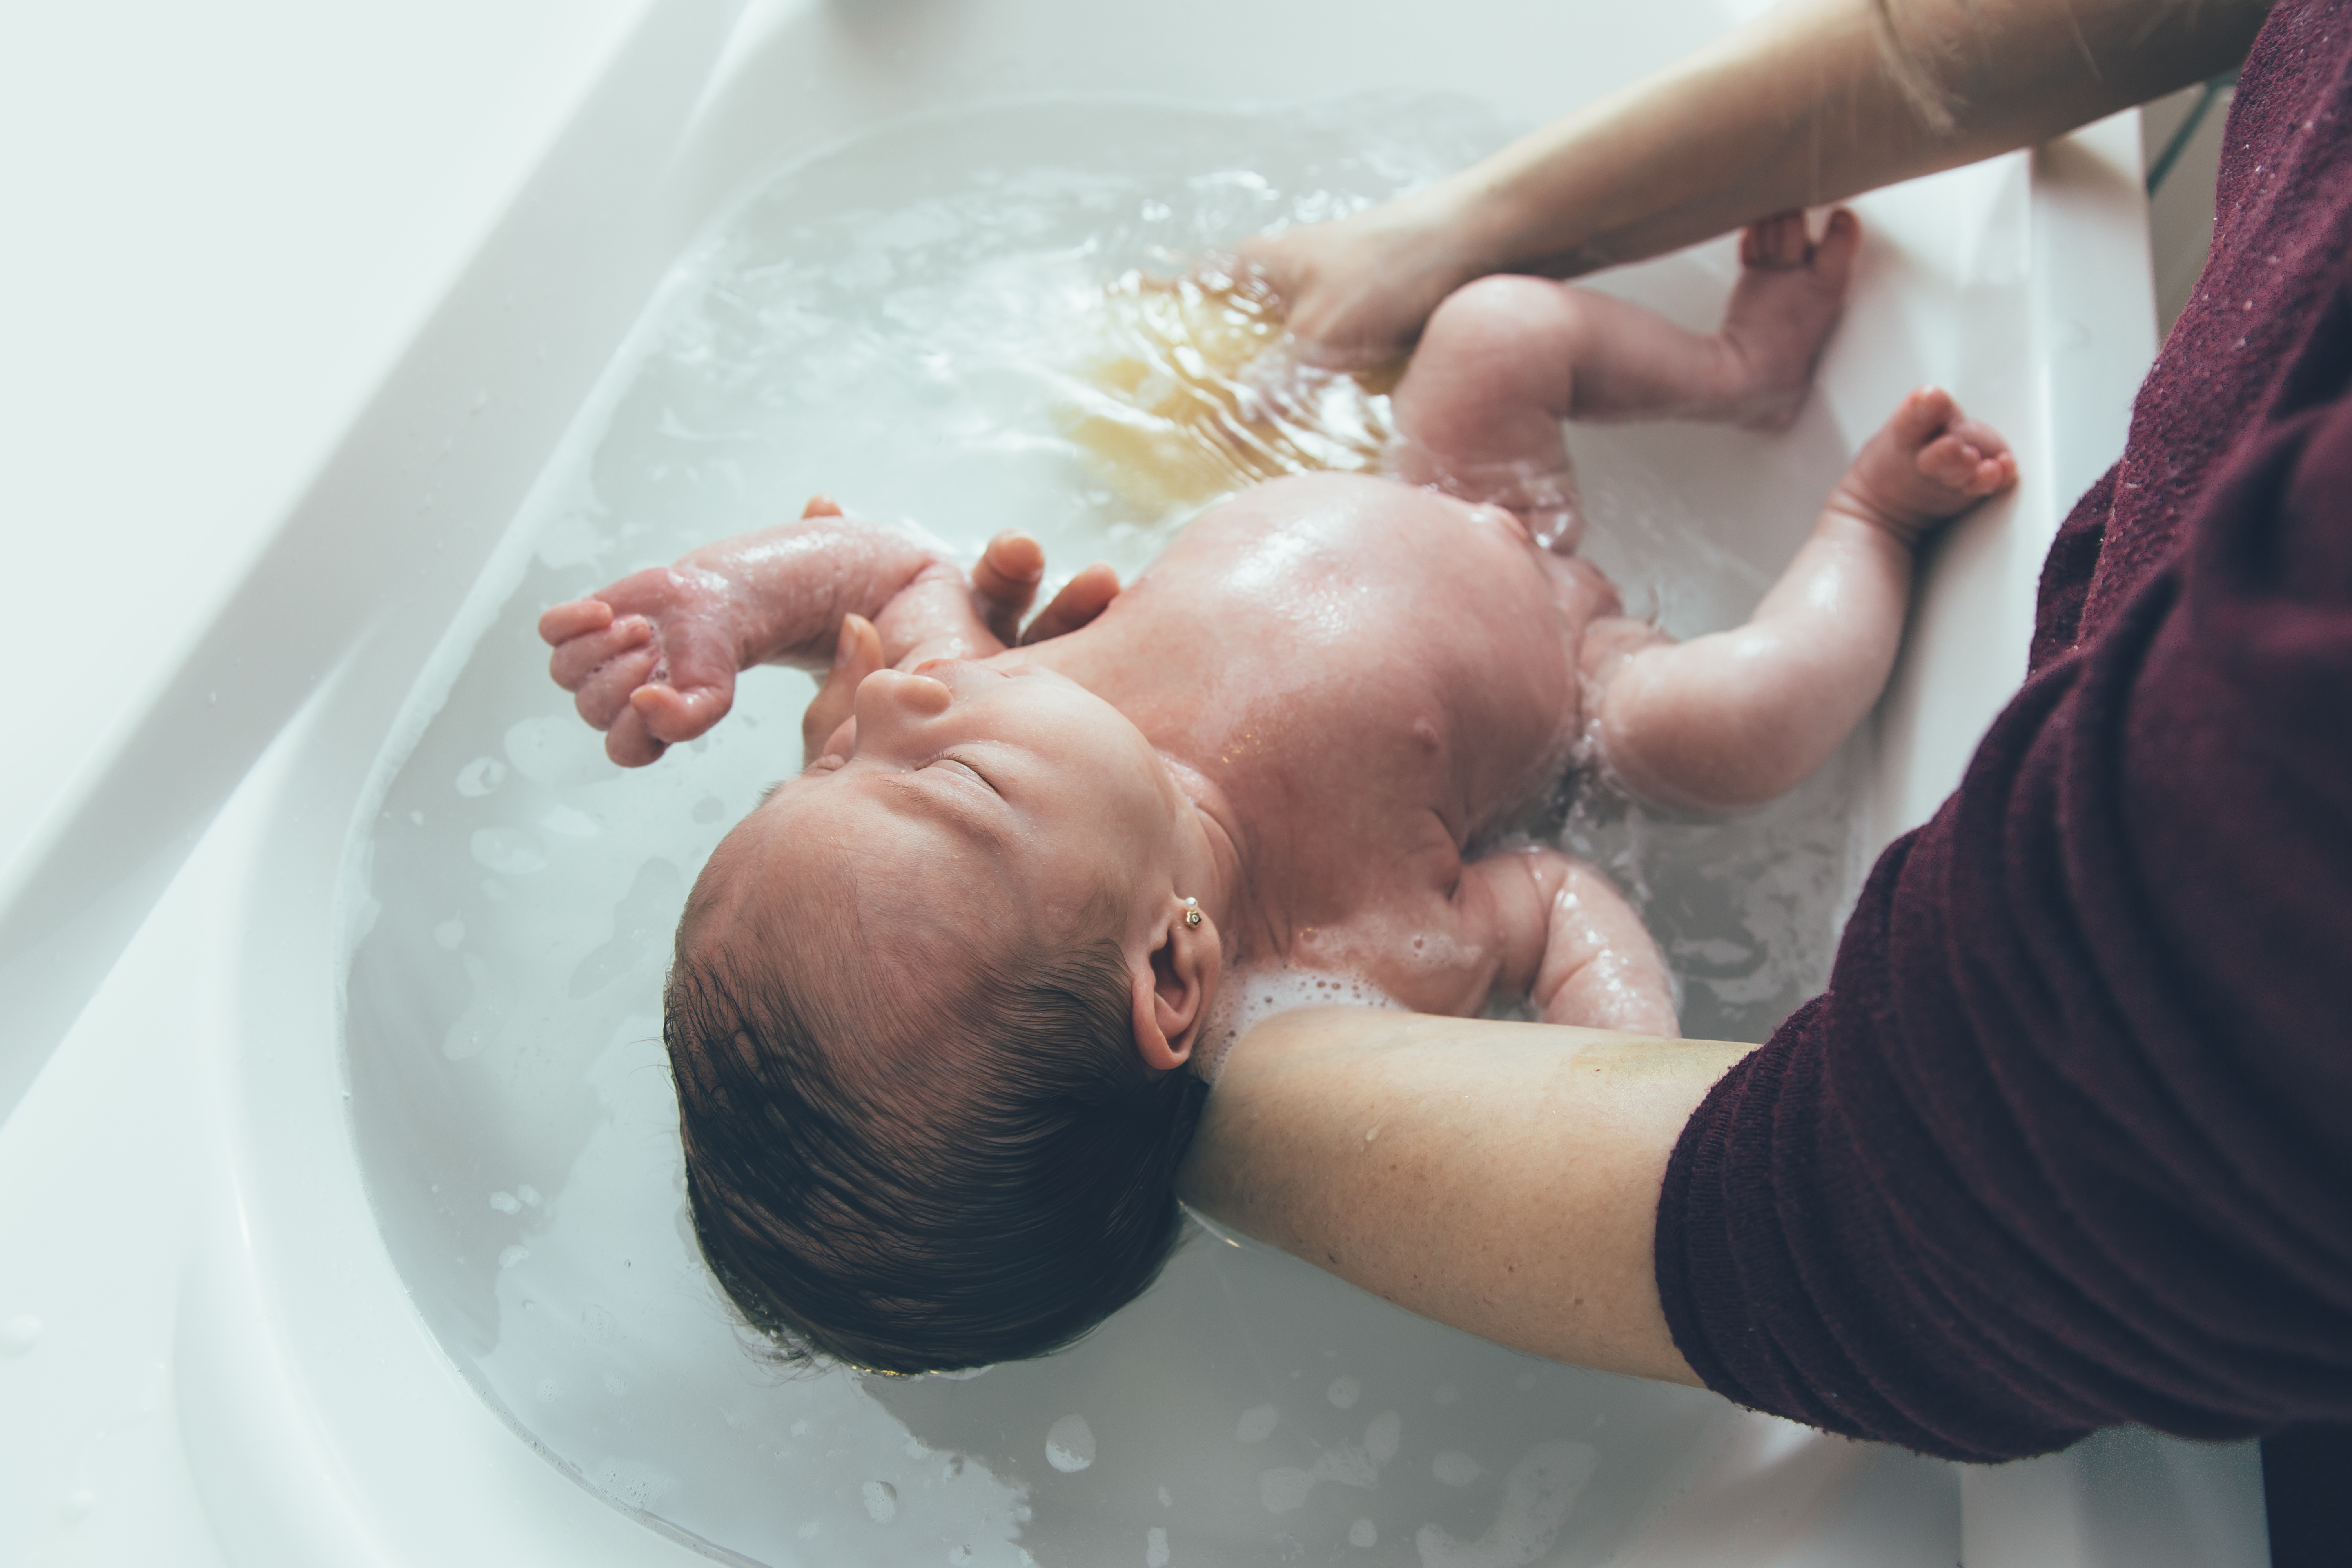 newborn bath